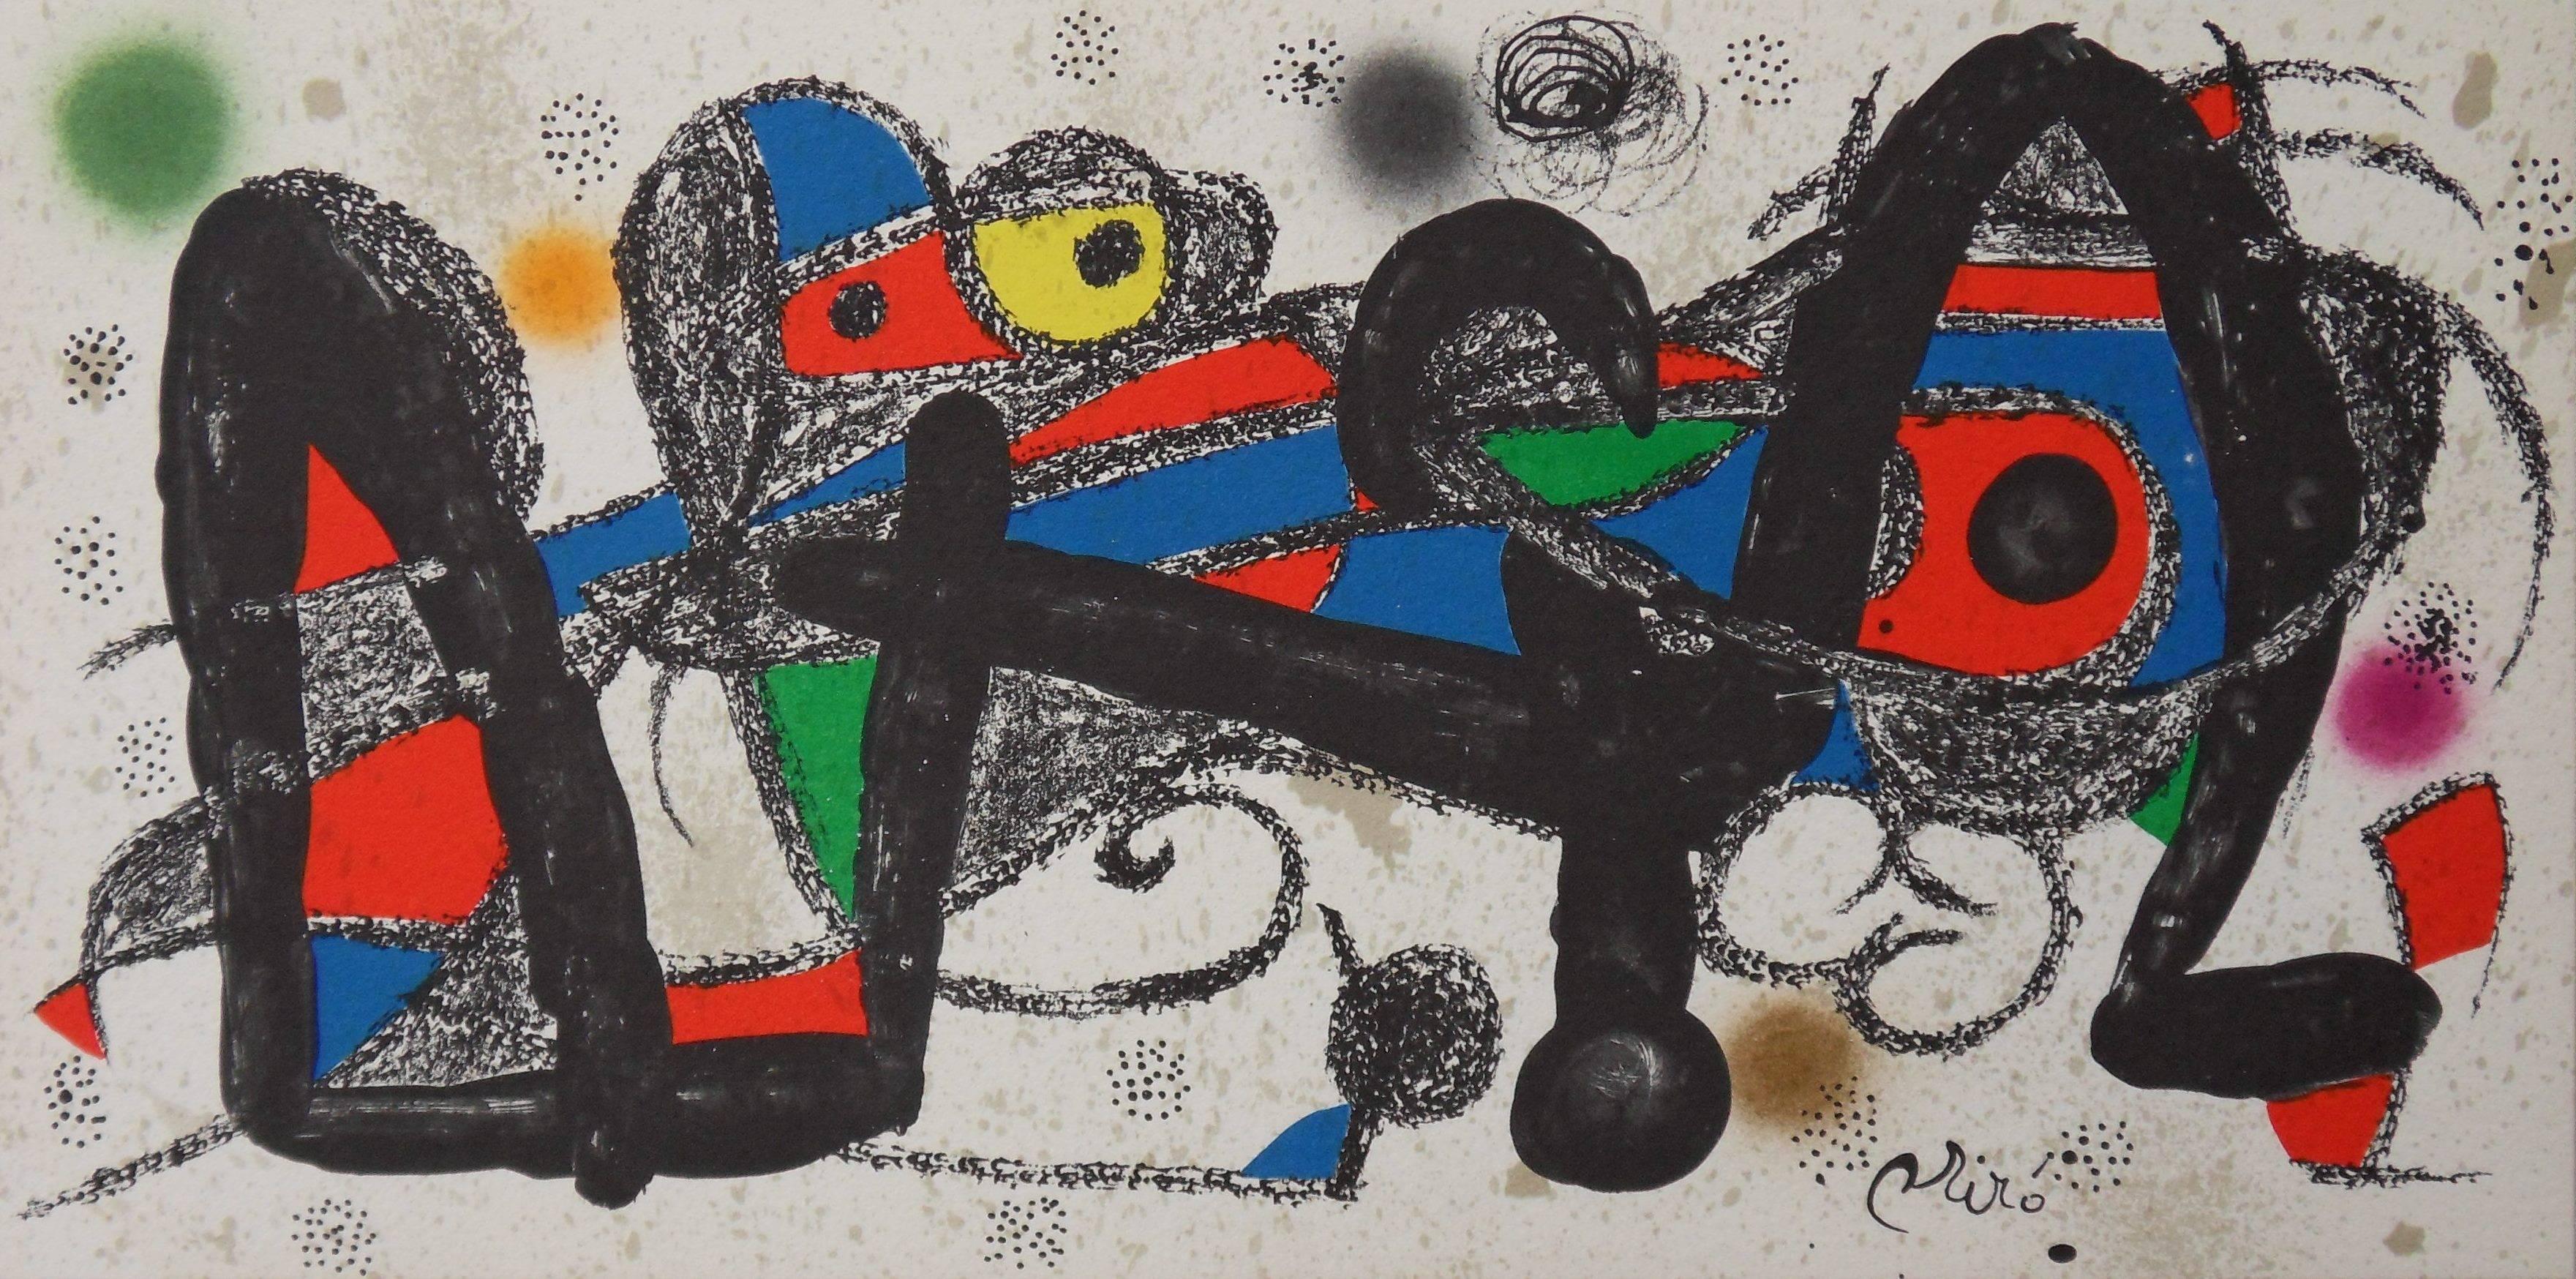 Joan Miró Abstract Print - Escultor : Portugal - Original lithograph - 1974